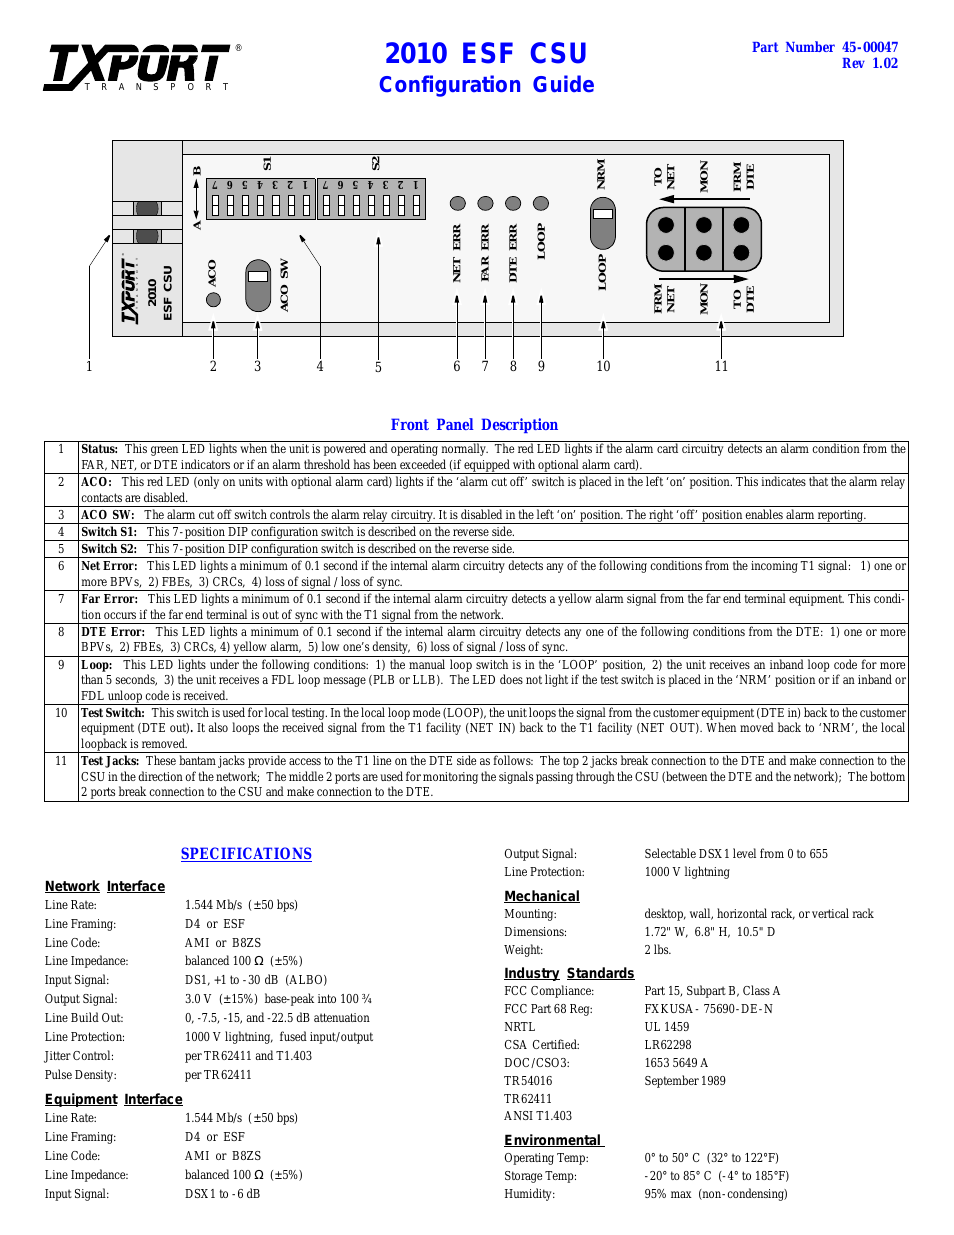 2010 Standalone (CG) Configuration/Installation Guide